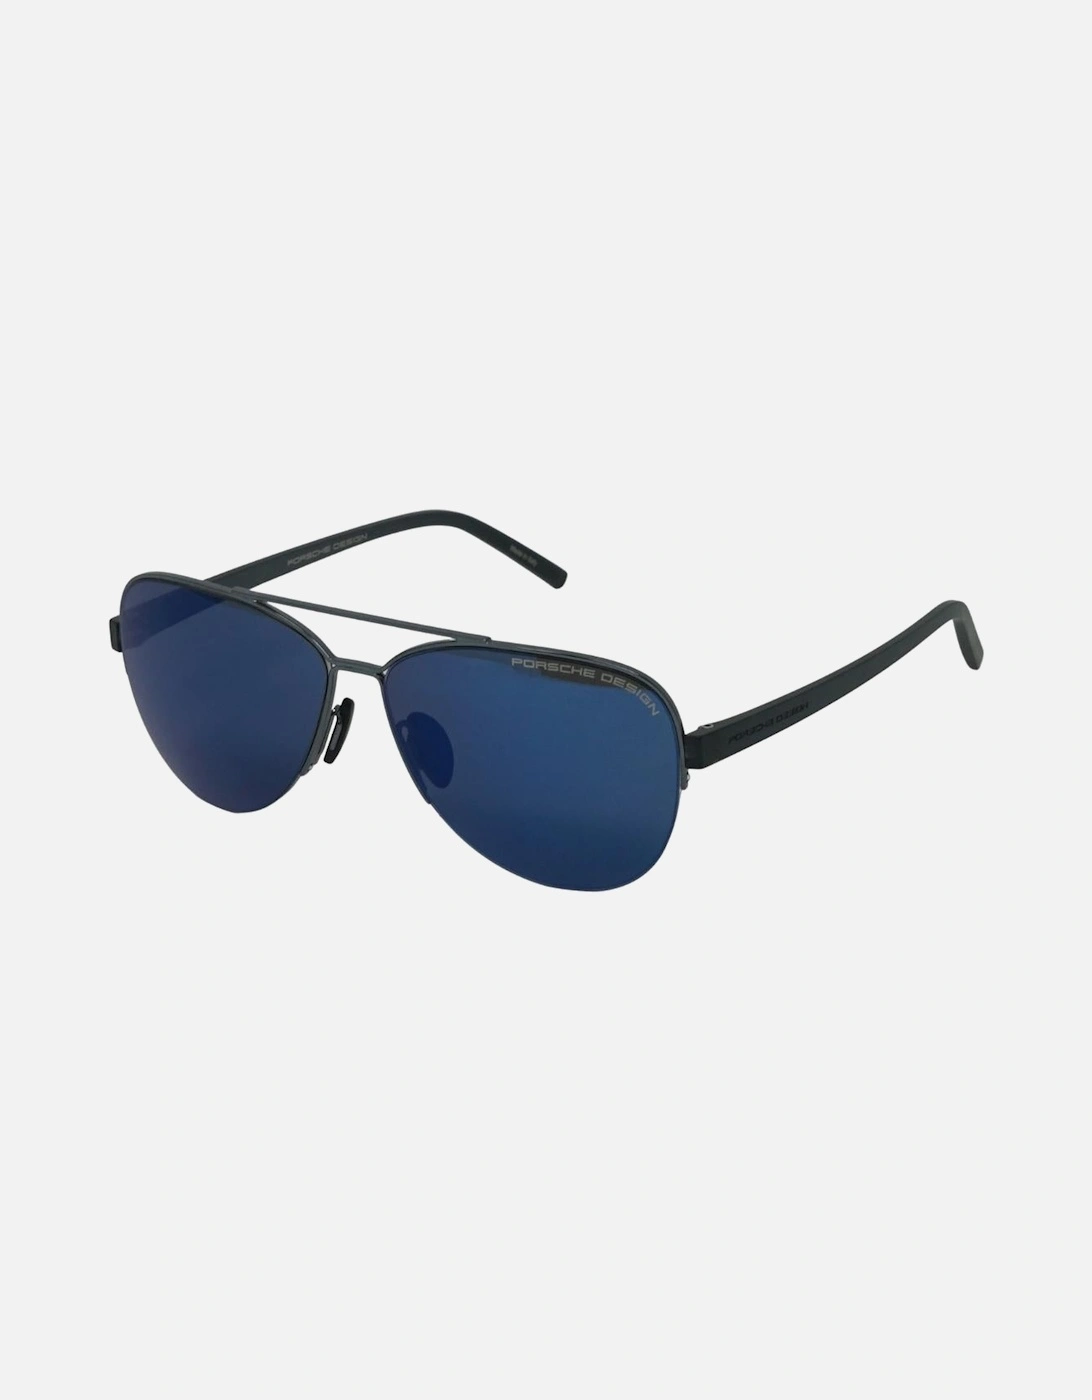 Porsche Design P8676 B Grey Sunglasses